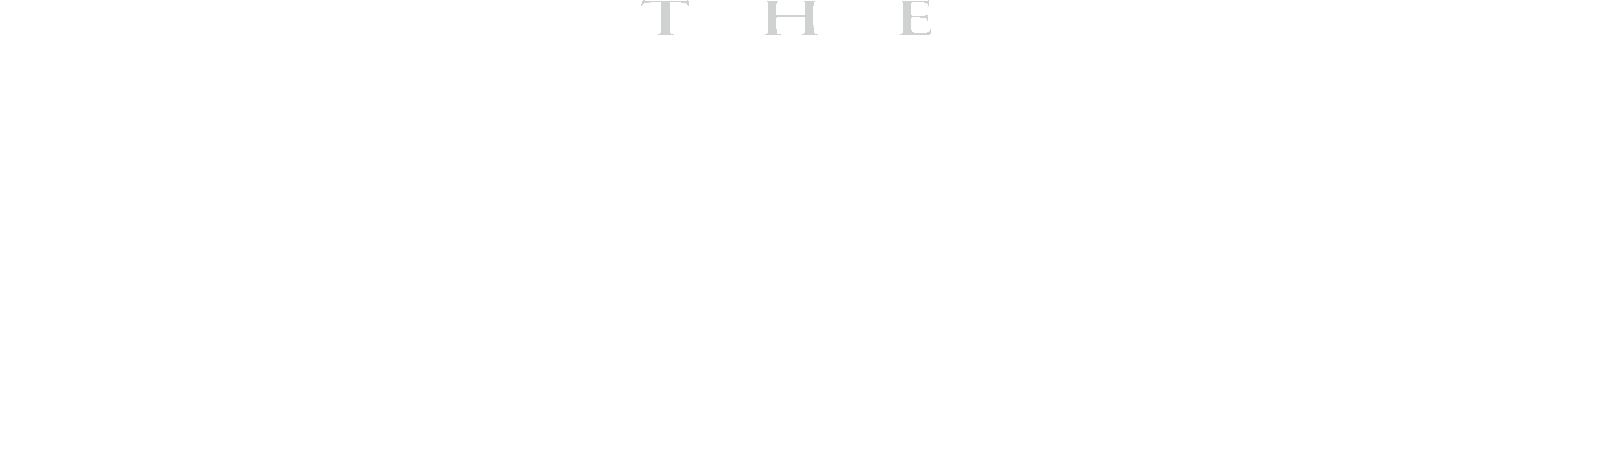 The Final Destination logo